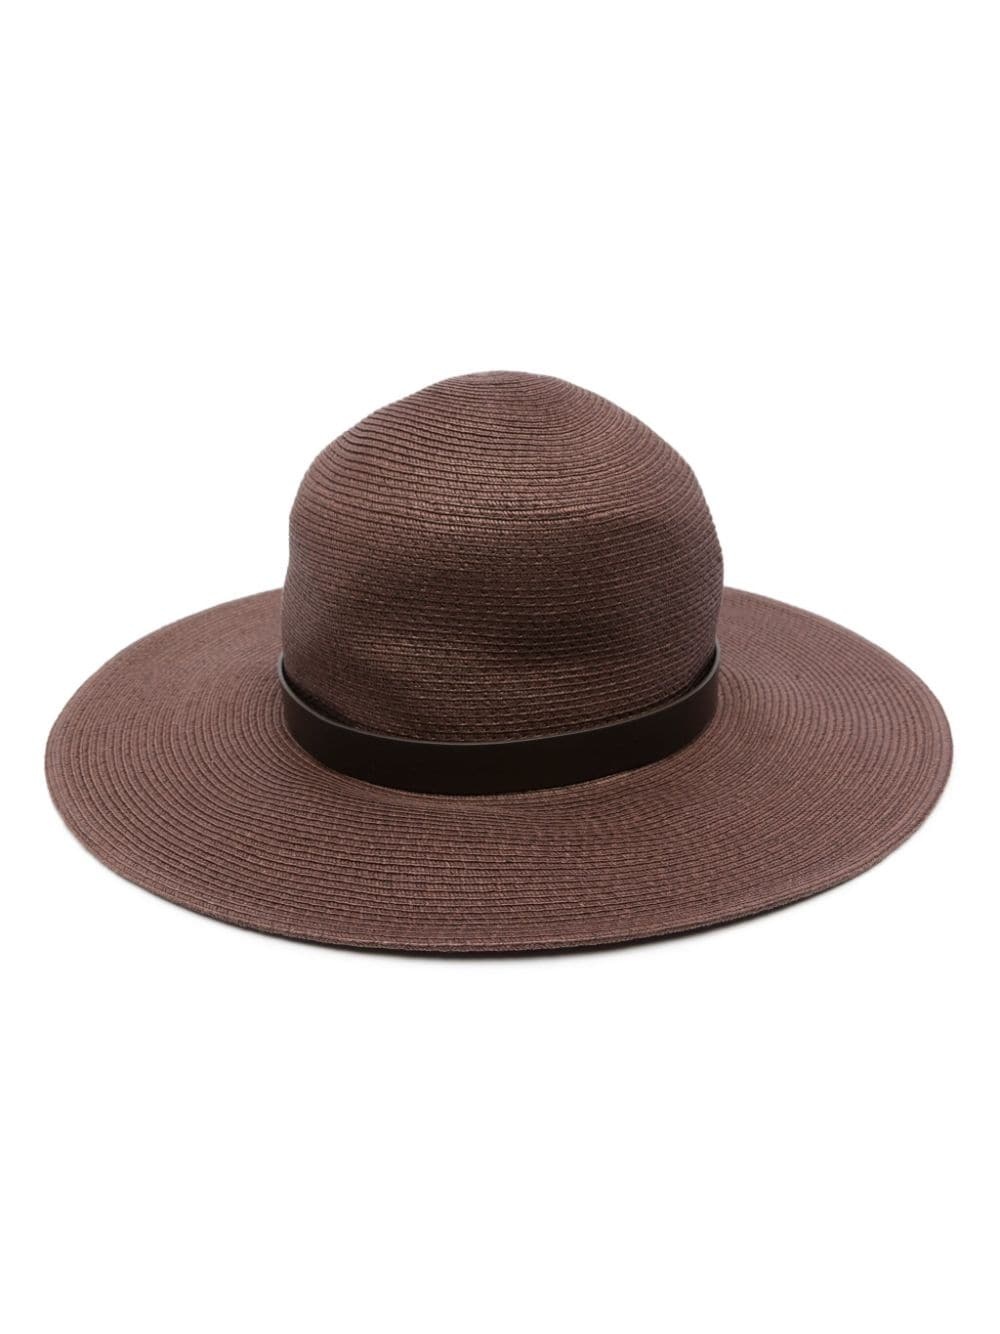 Musette sun hat - 1